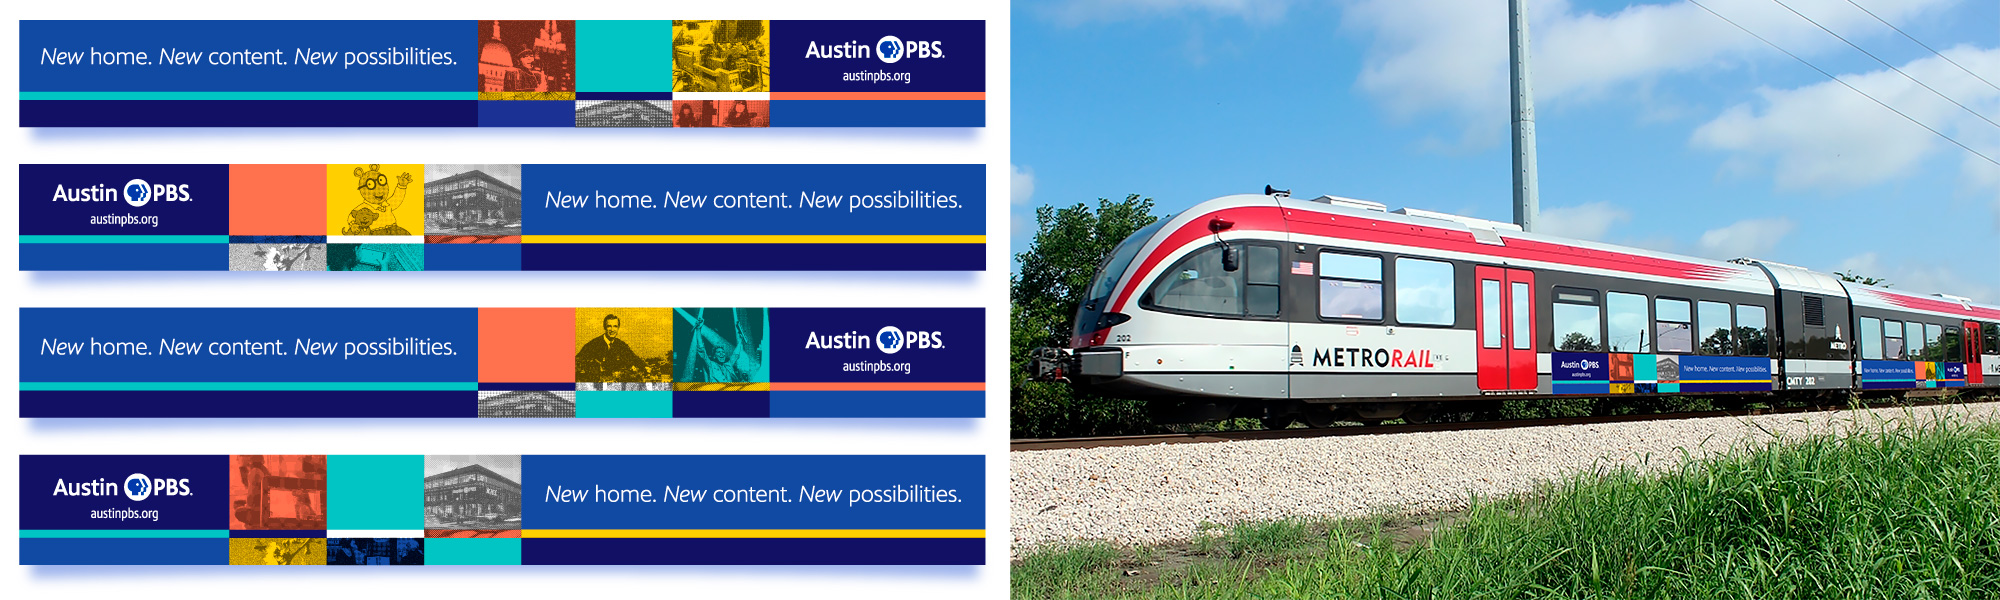 APBS-metrorail-ads